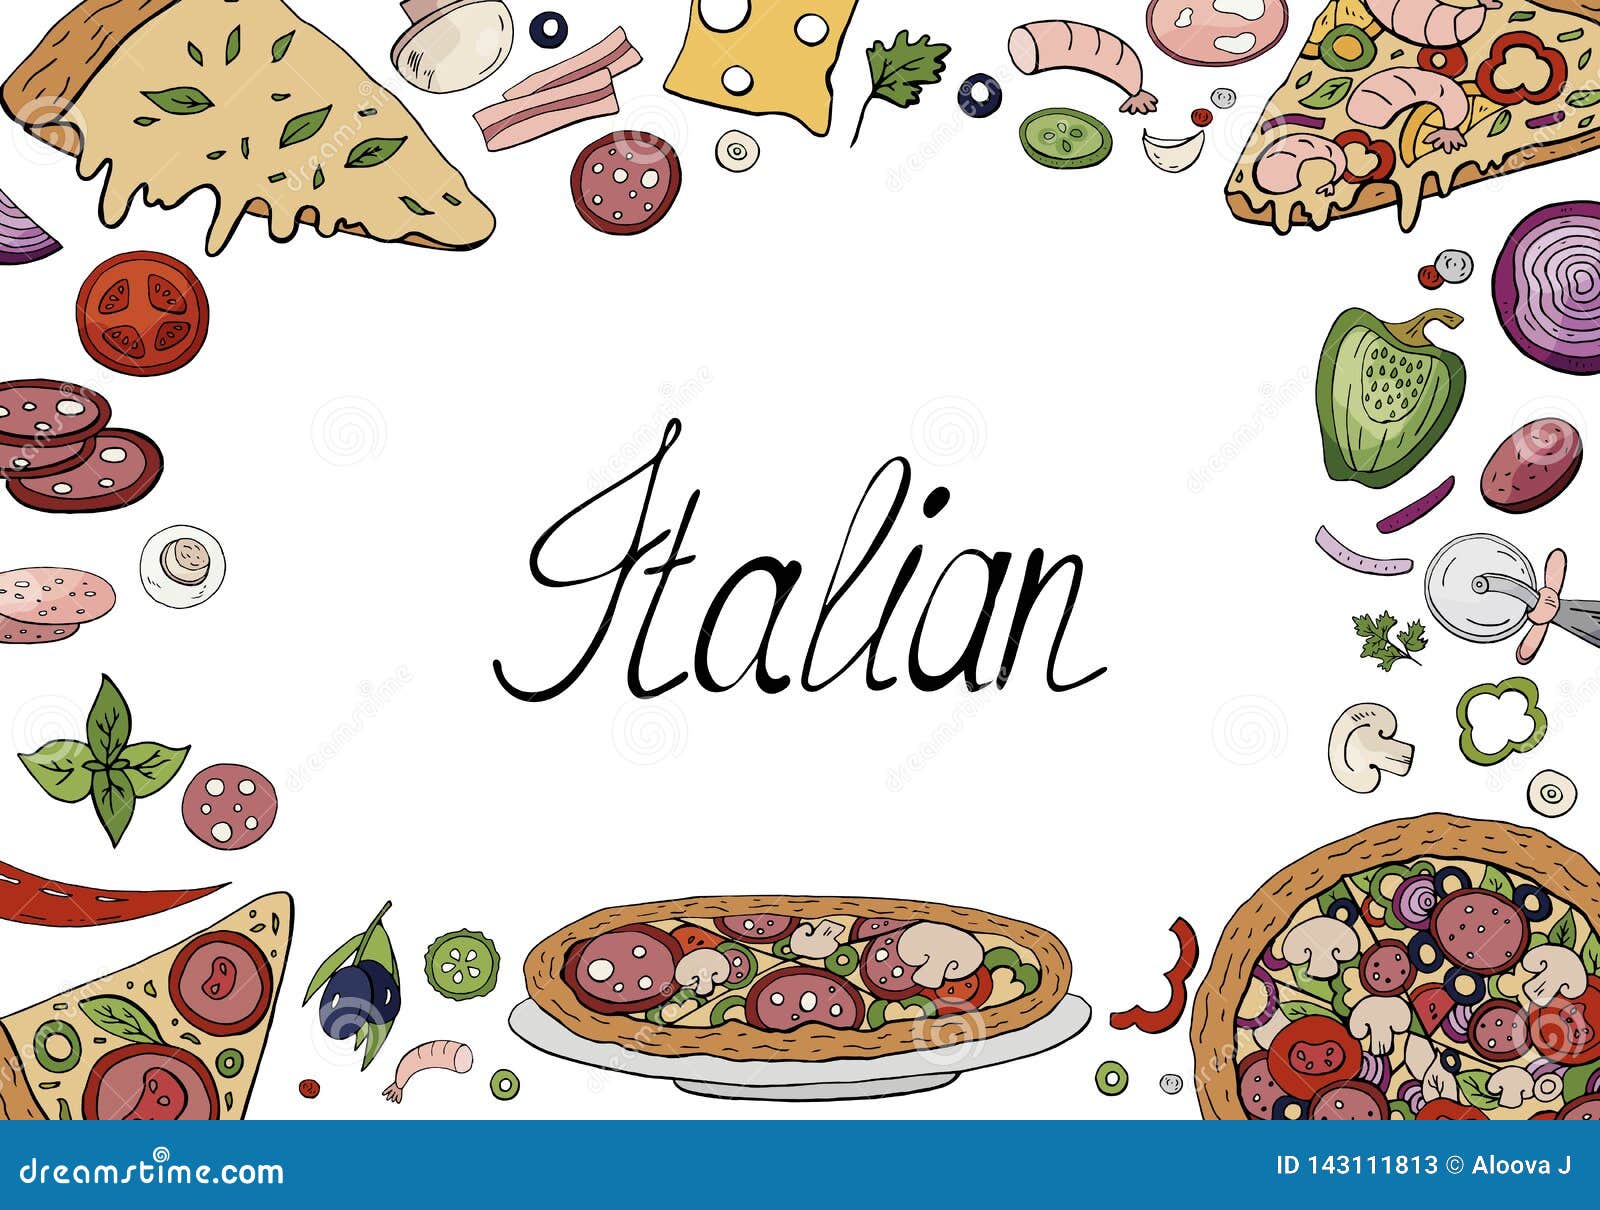 Set of Hand Drawn Italian Food Elements Isolated on White Background ...